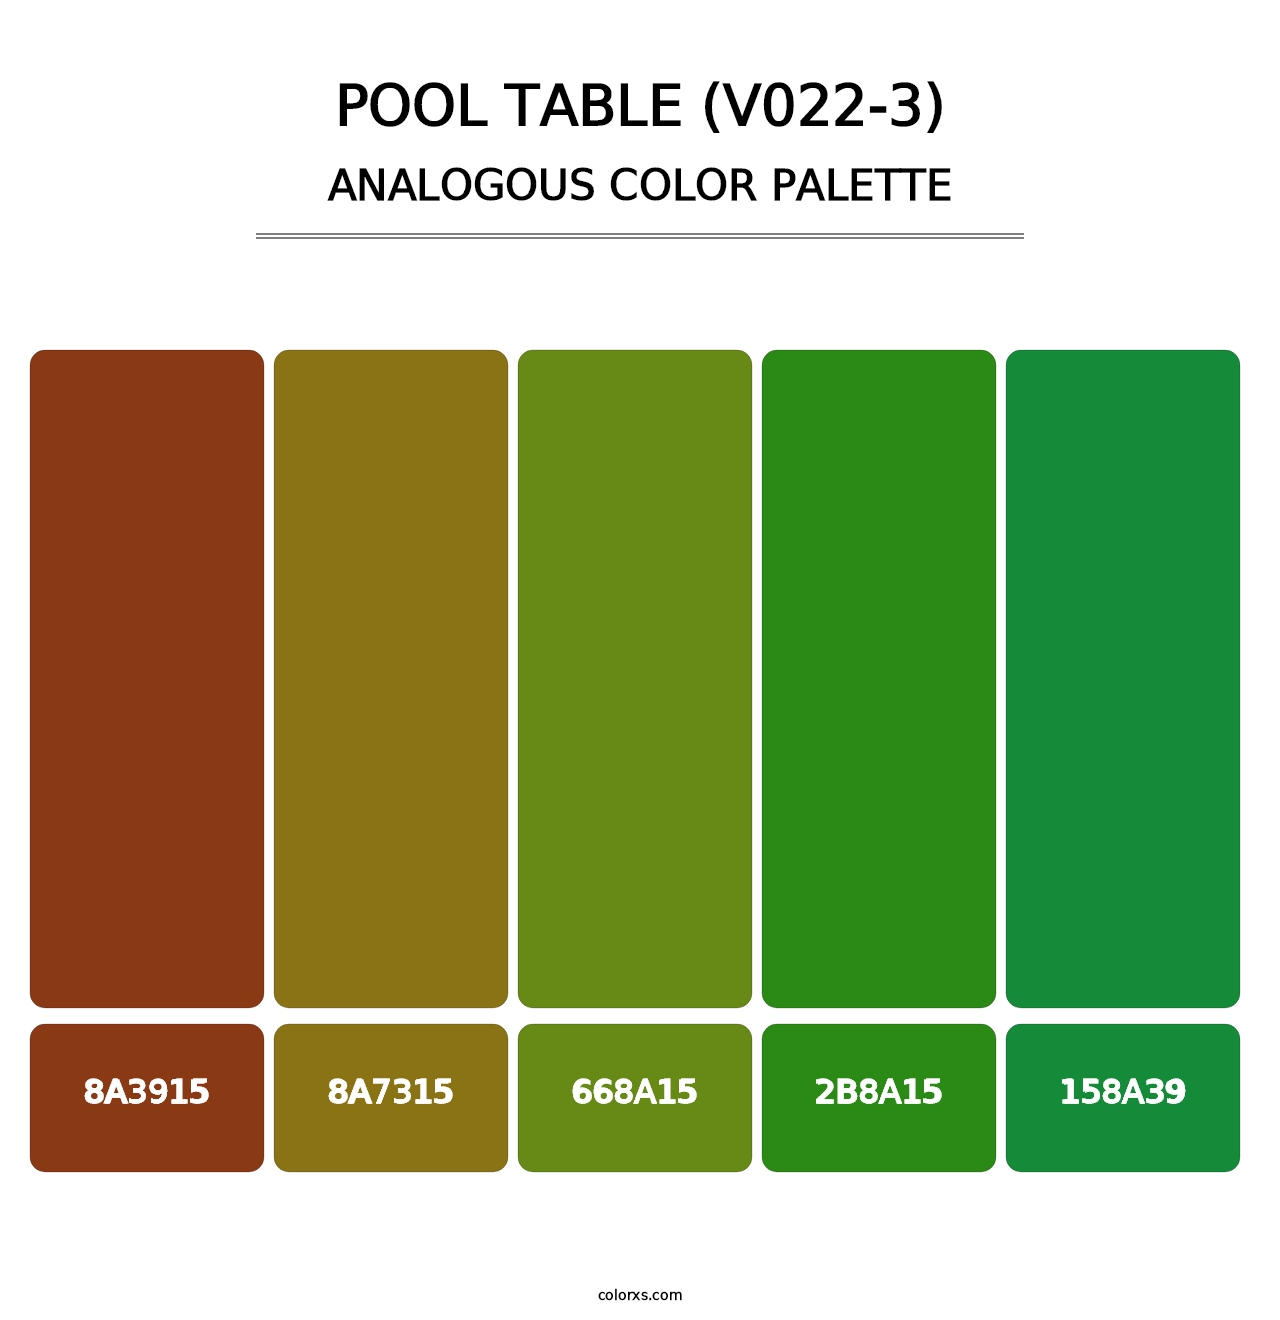 Pool Table (V022-3) - Analogous Color Palette